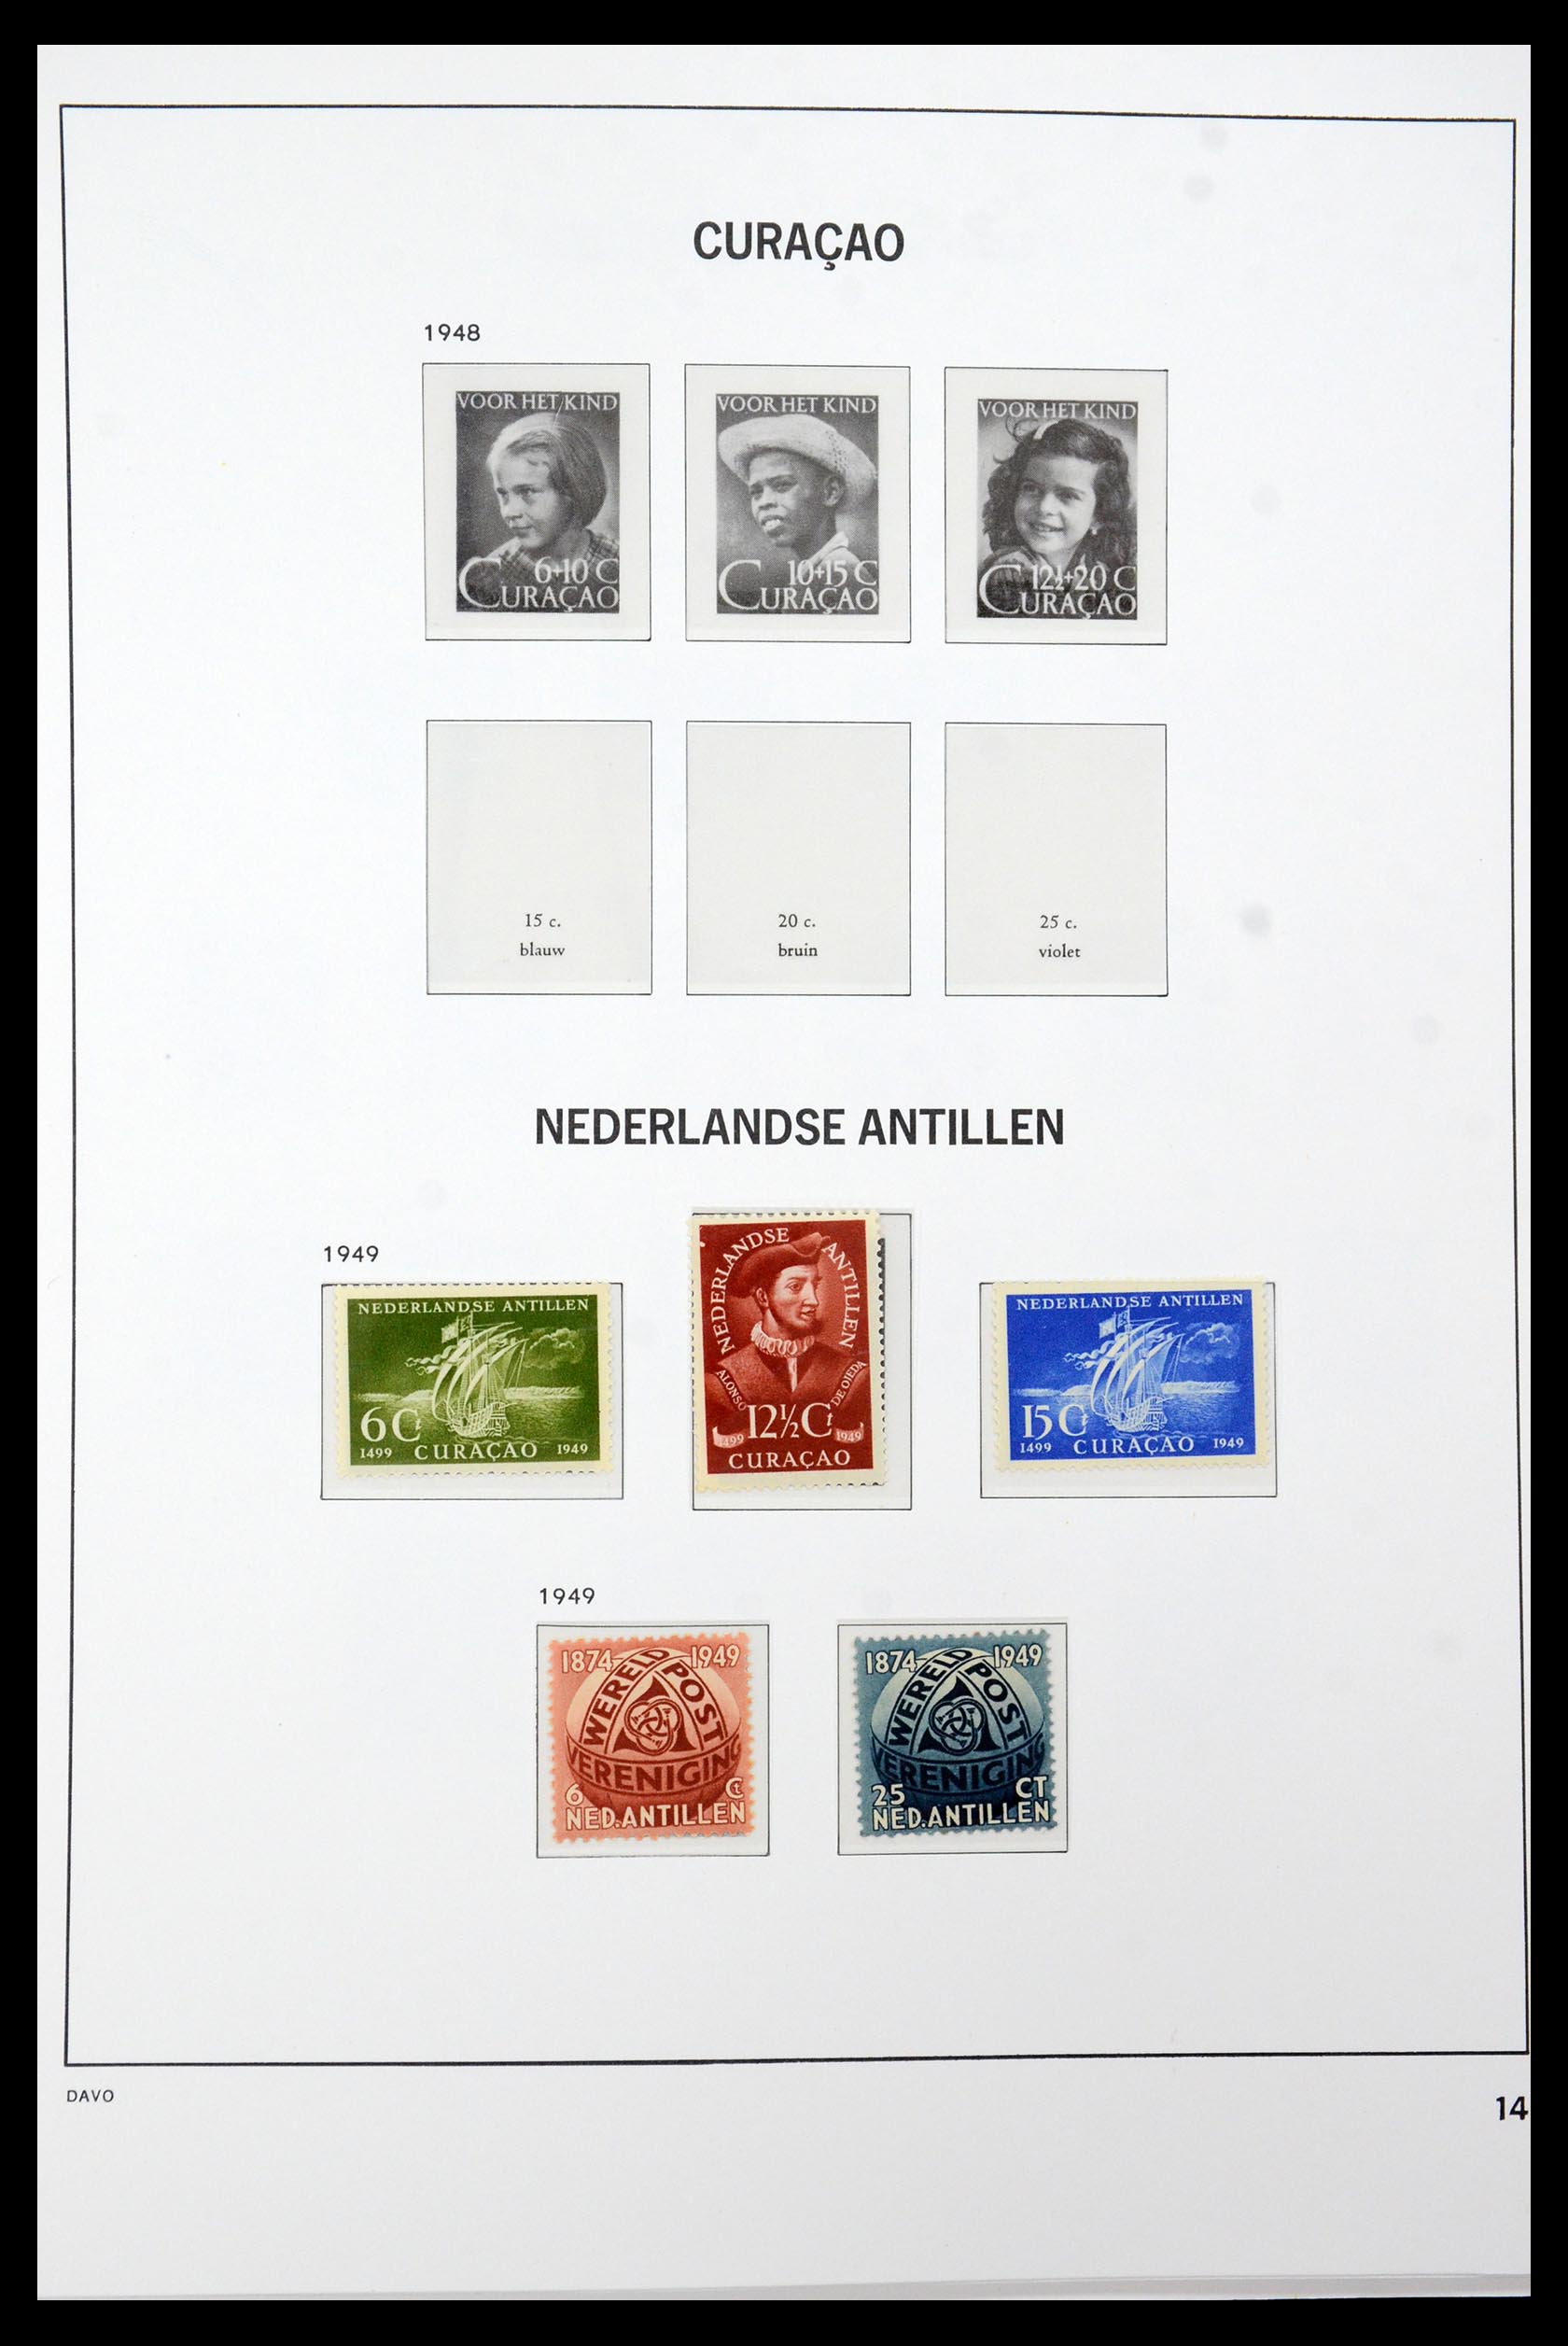 36393 001 - Stamp collection 36393 Netherlands Antilles 1949-2010.